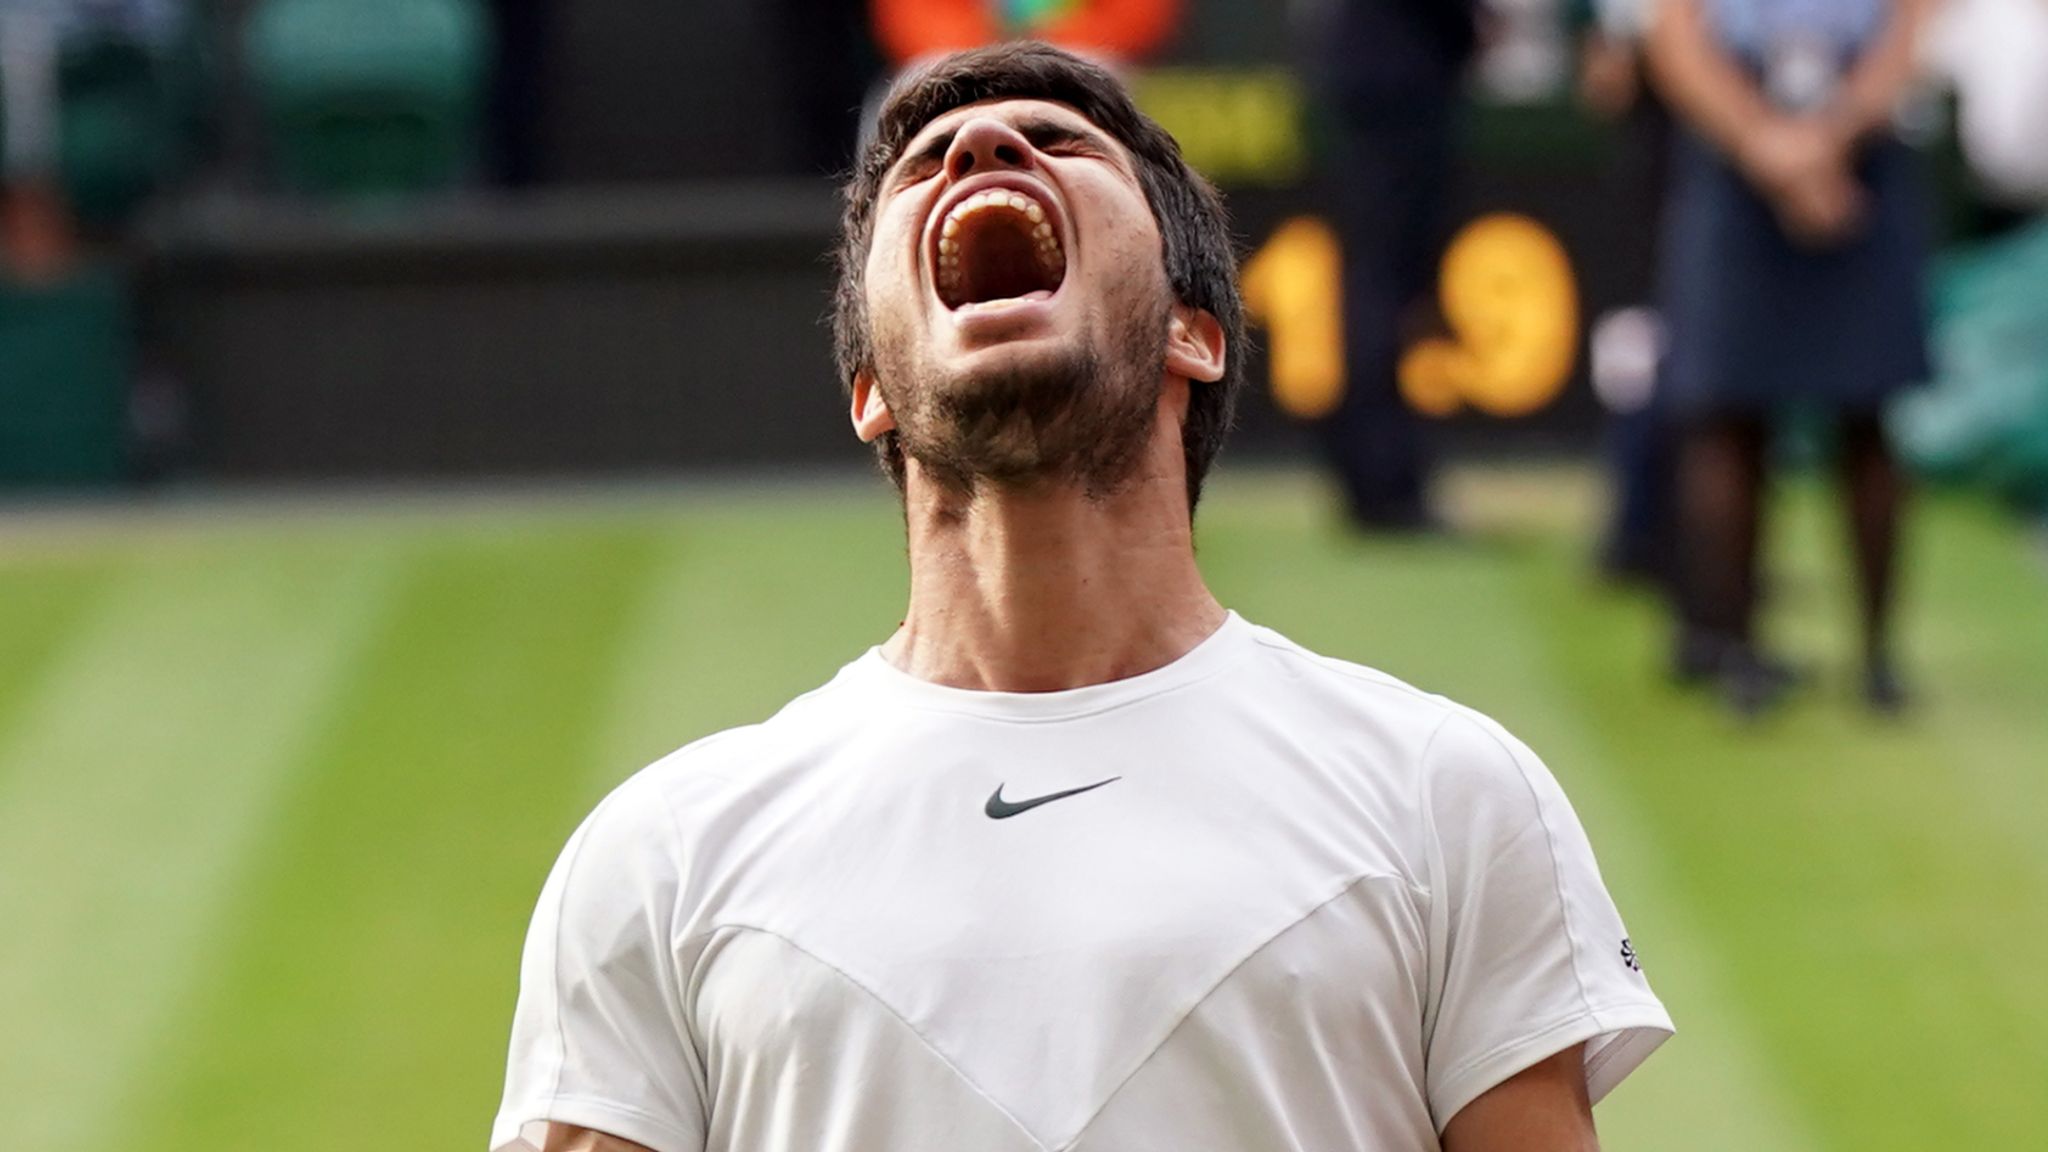 Alcaraz vs Djokovic In Wimbledon Final For World No. 1